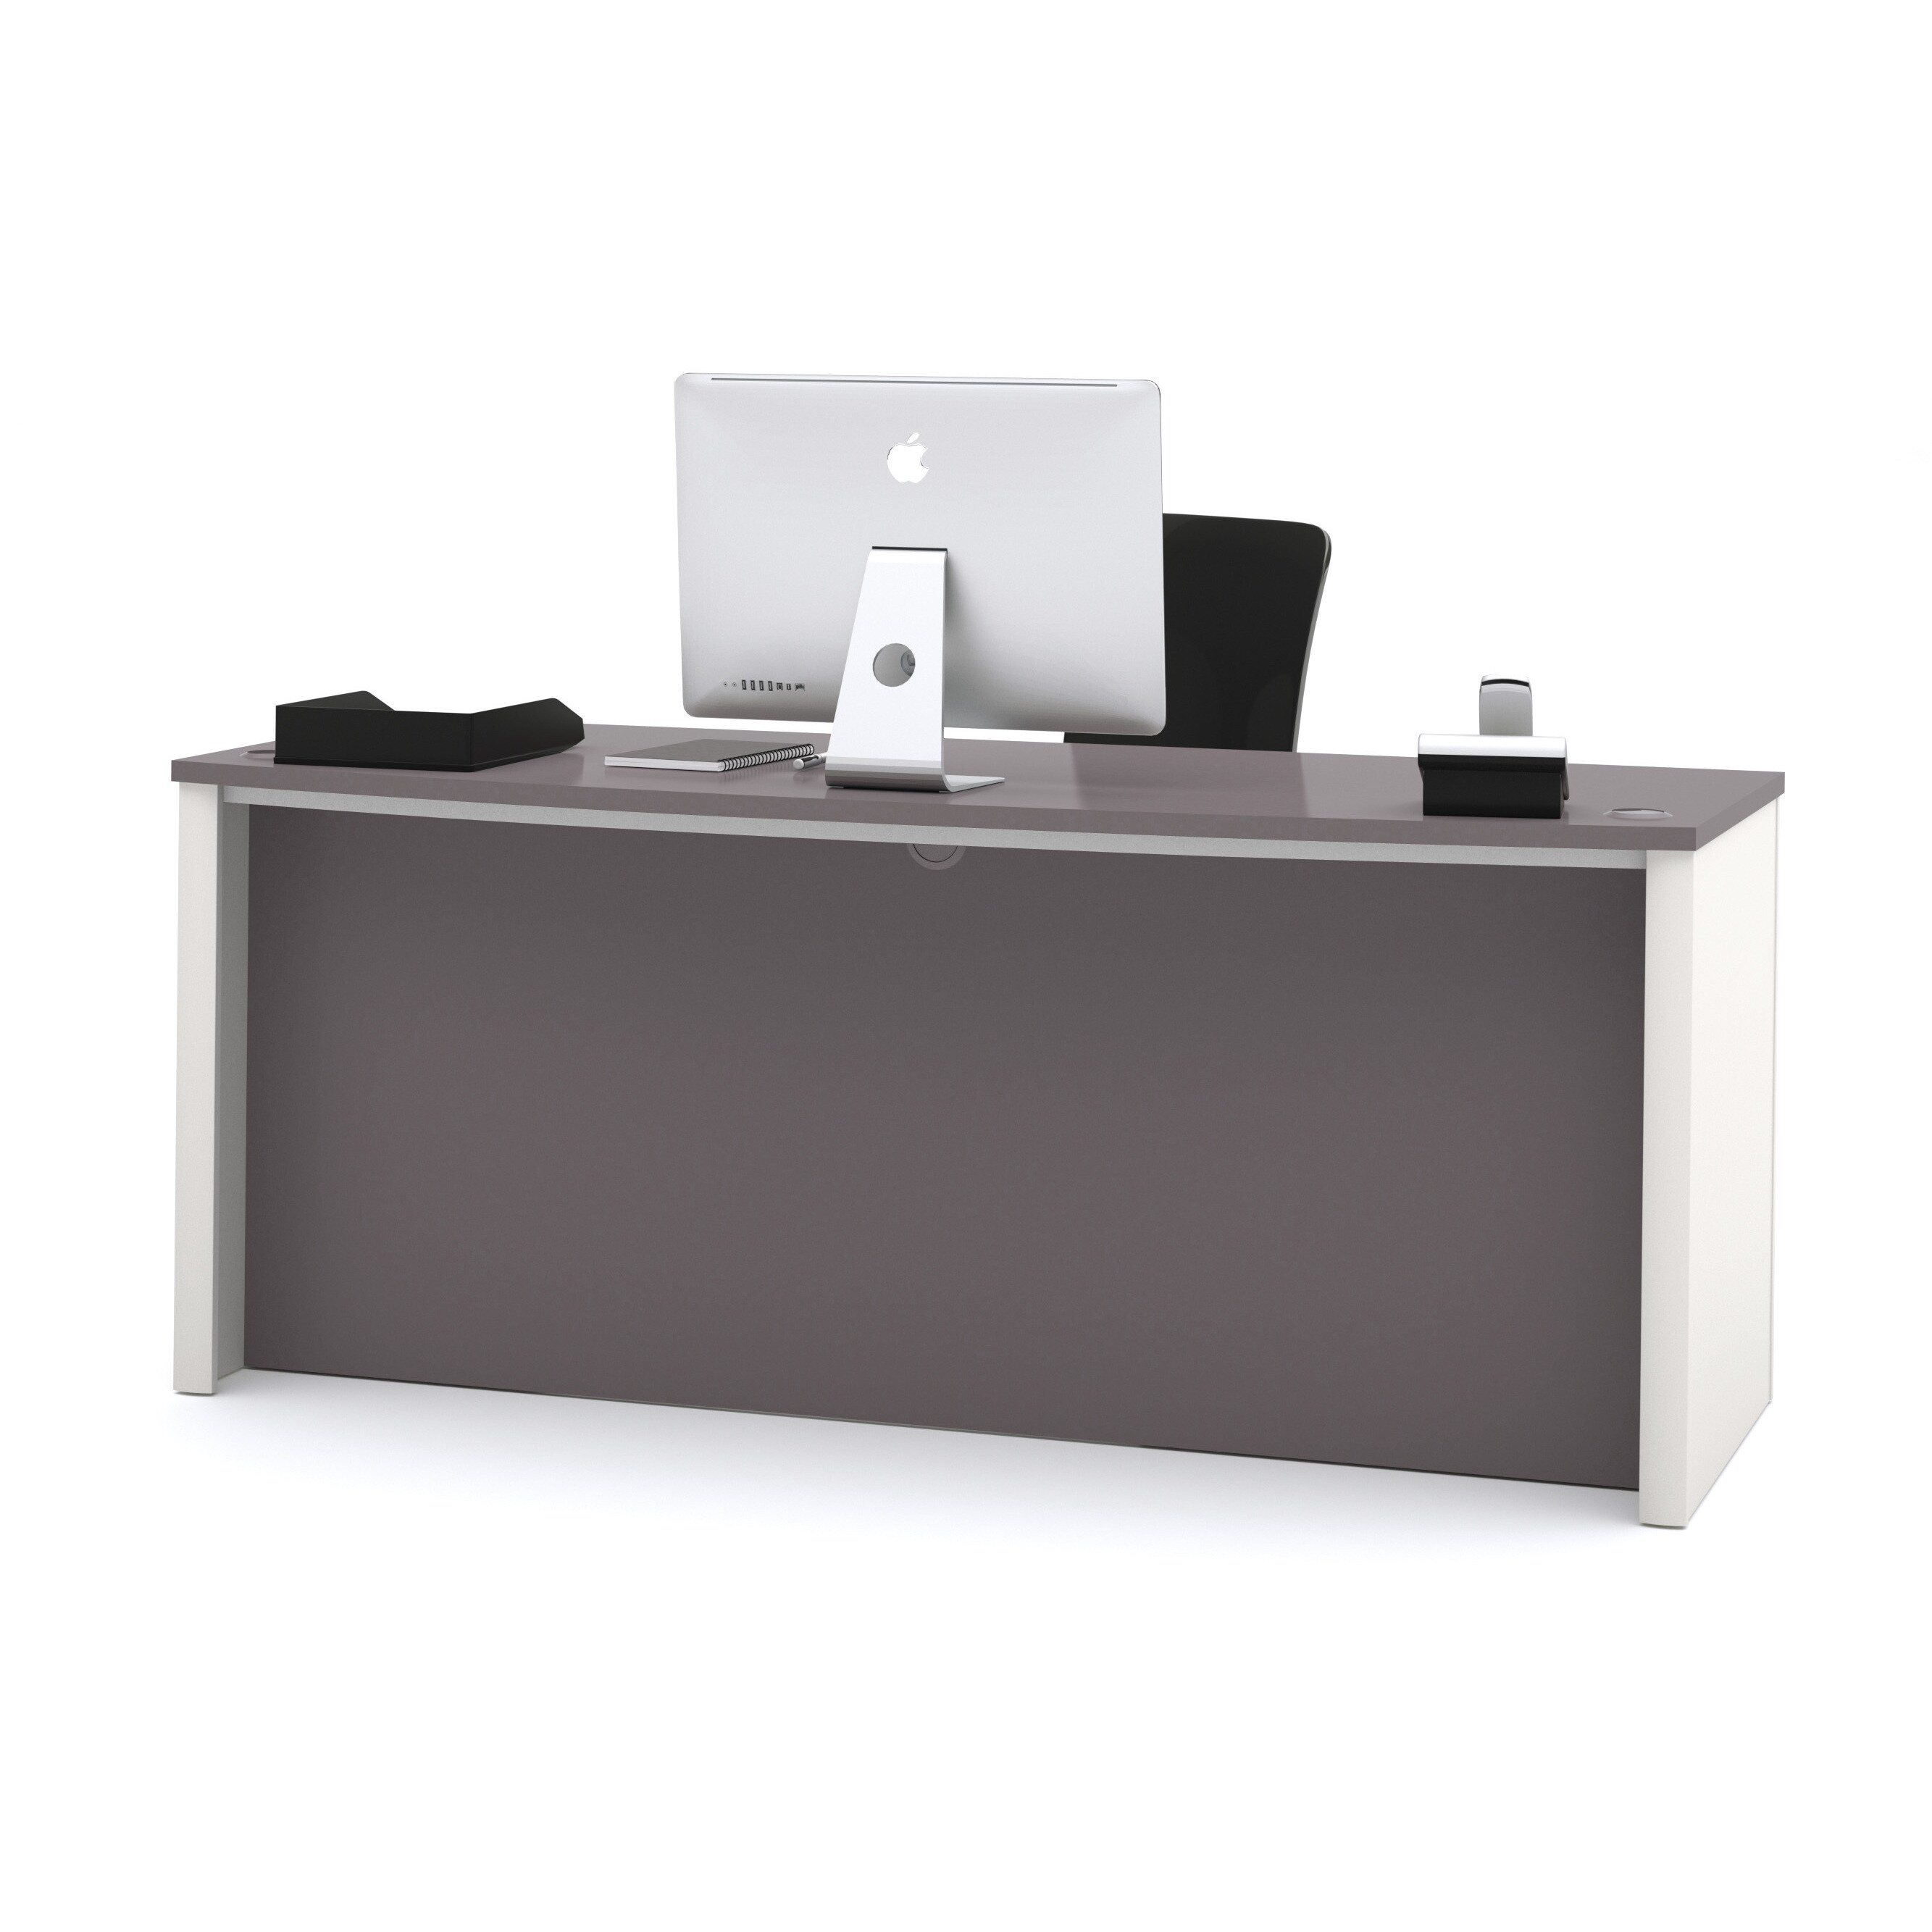 Bestar Connexion Executive Desk - sandstone